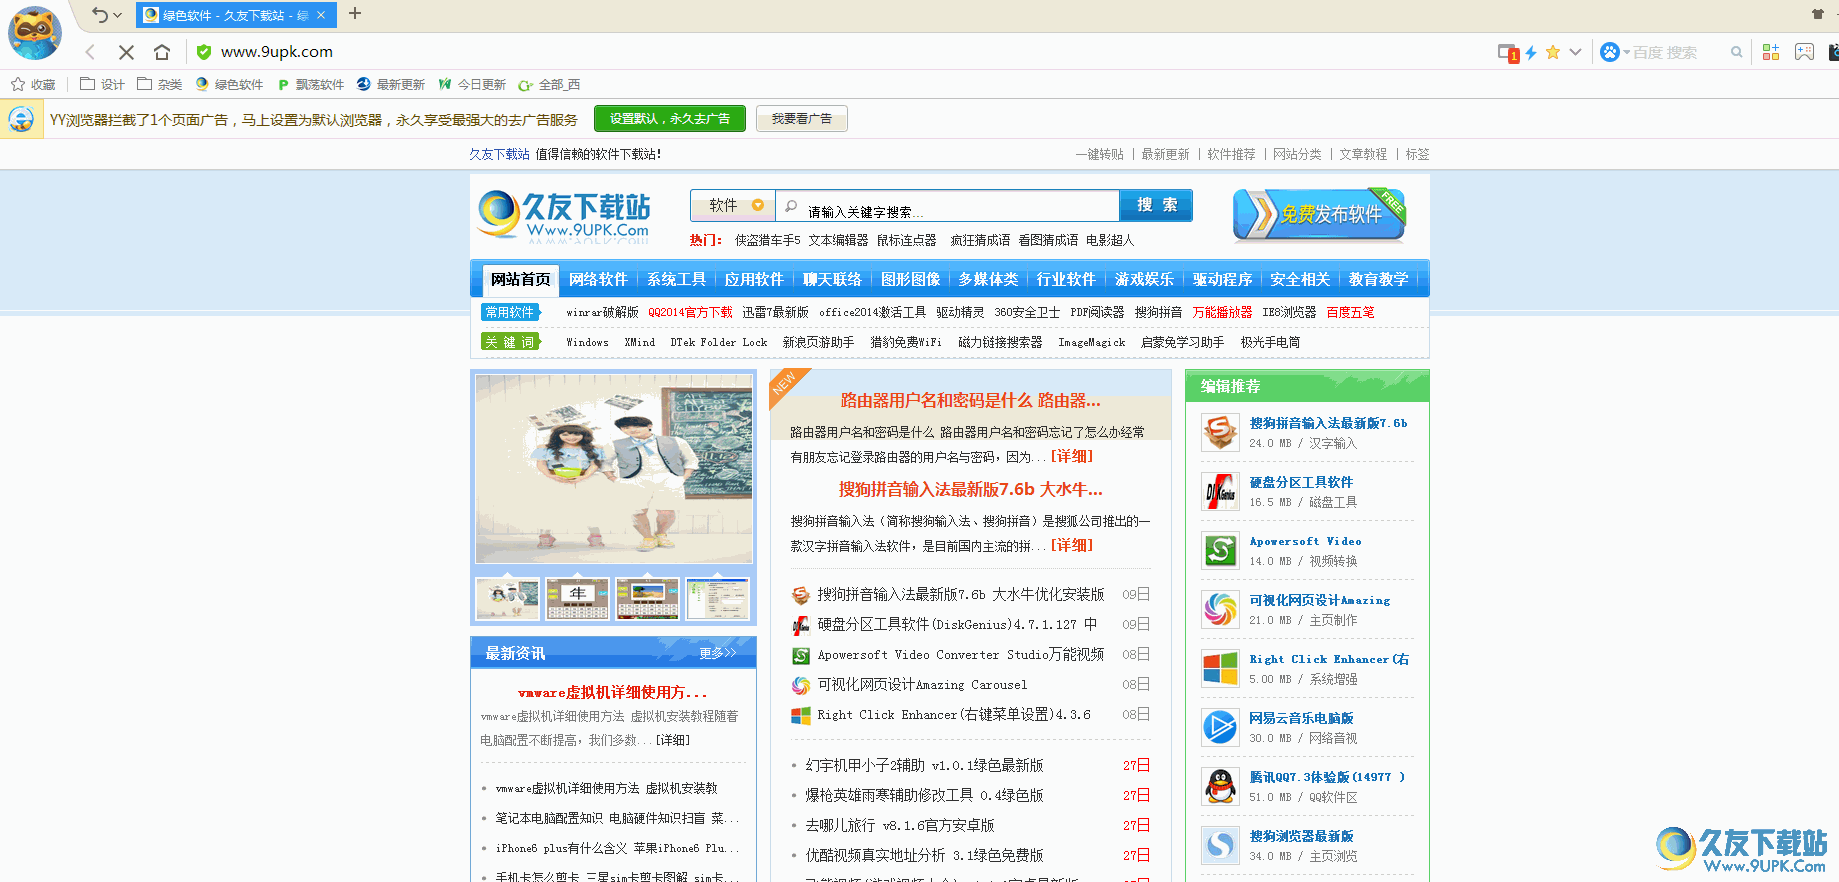 YY浏览器 3.9.4908.0 官方最新版